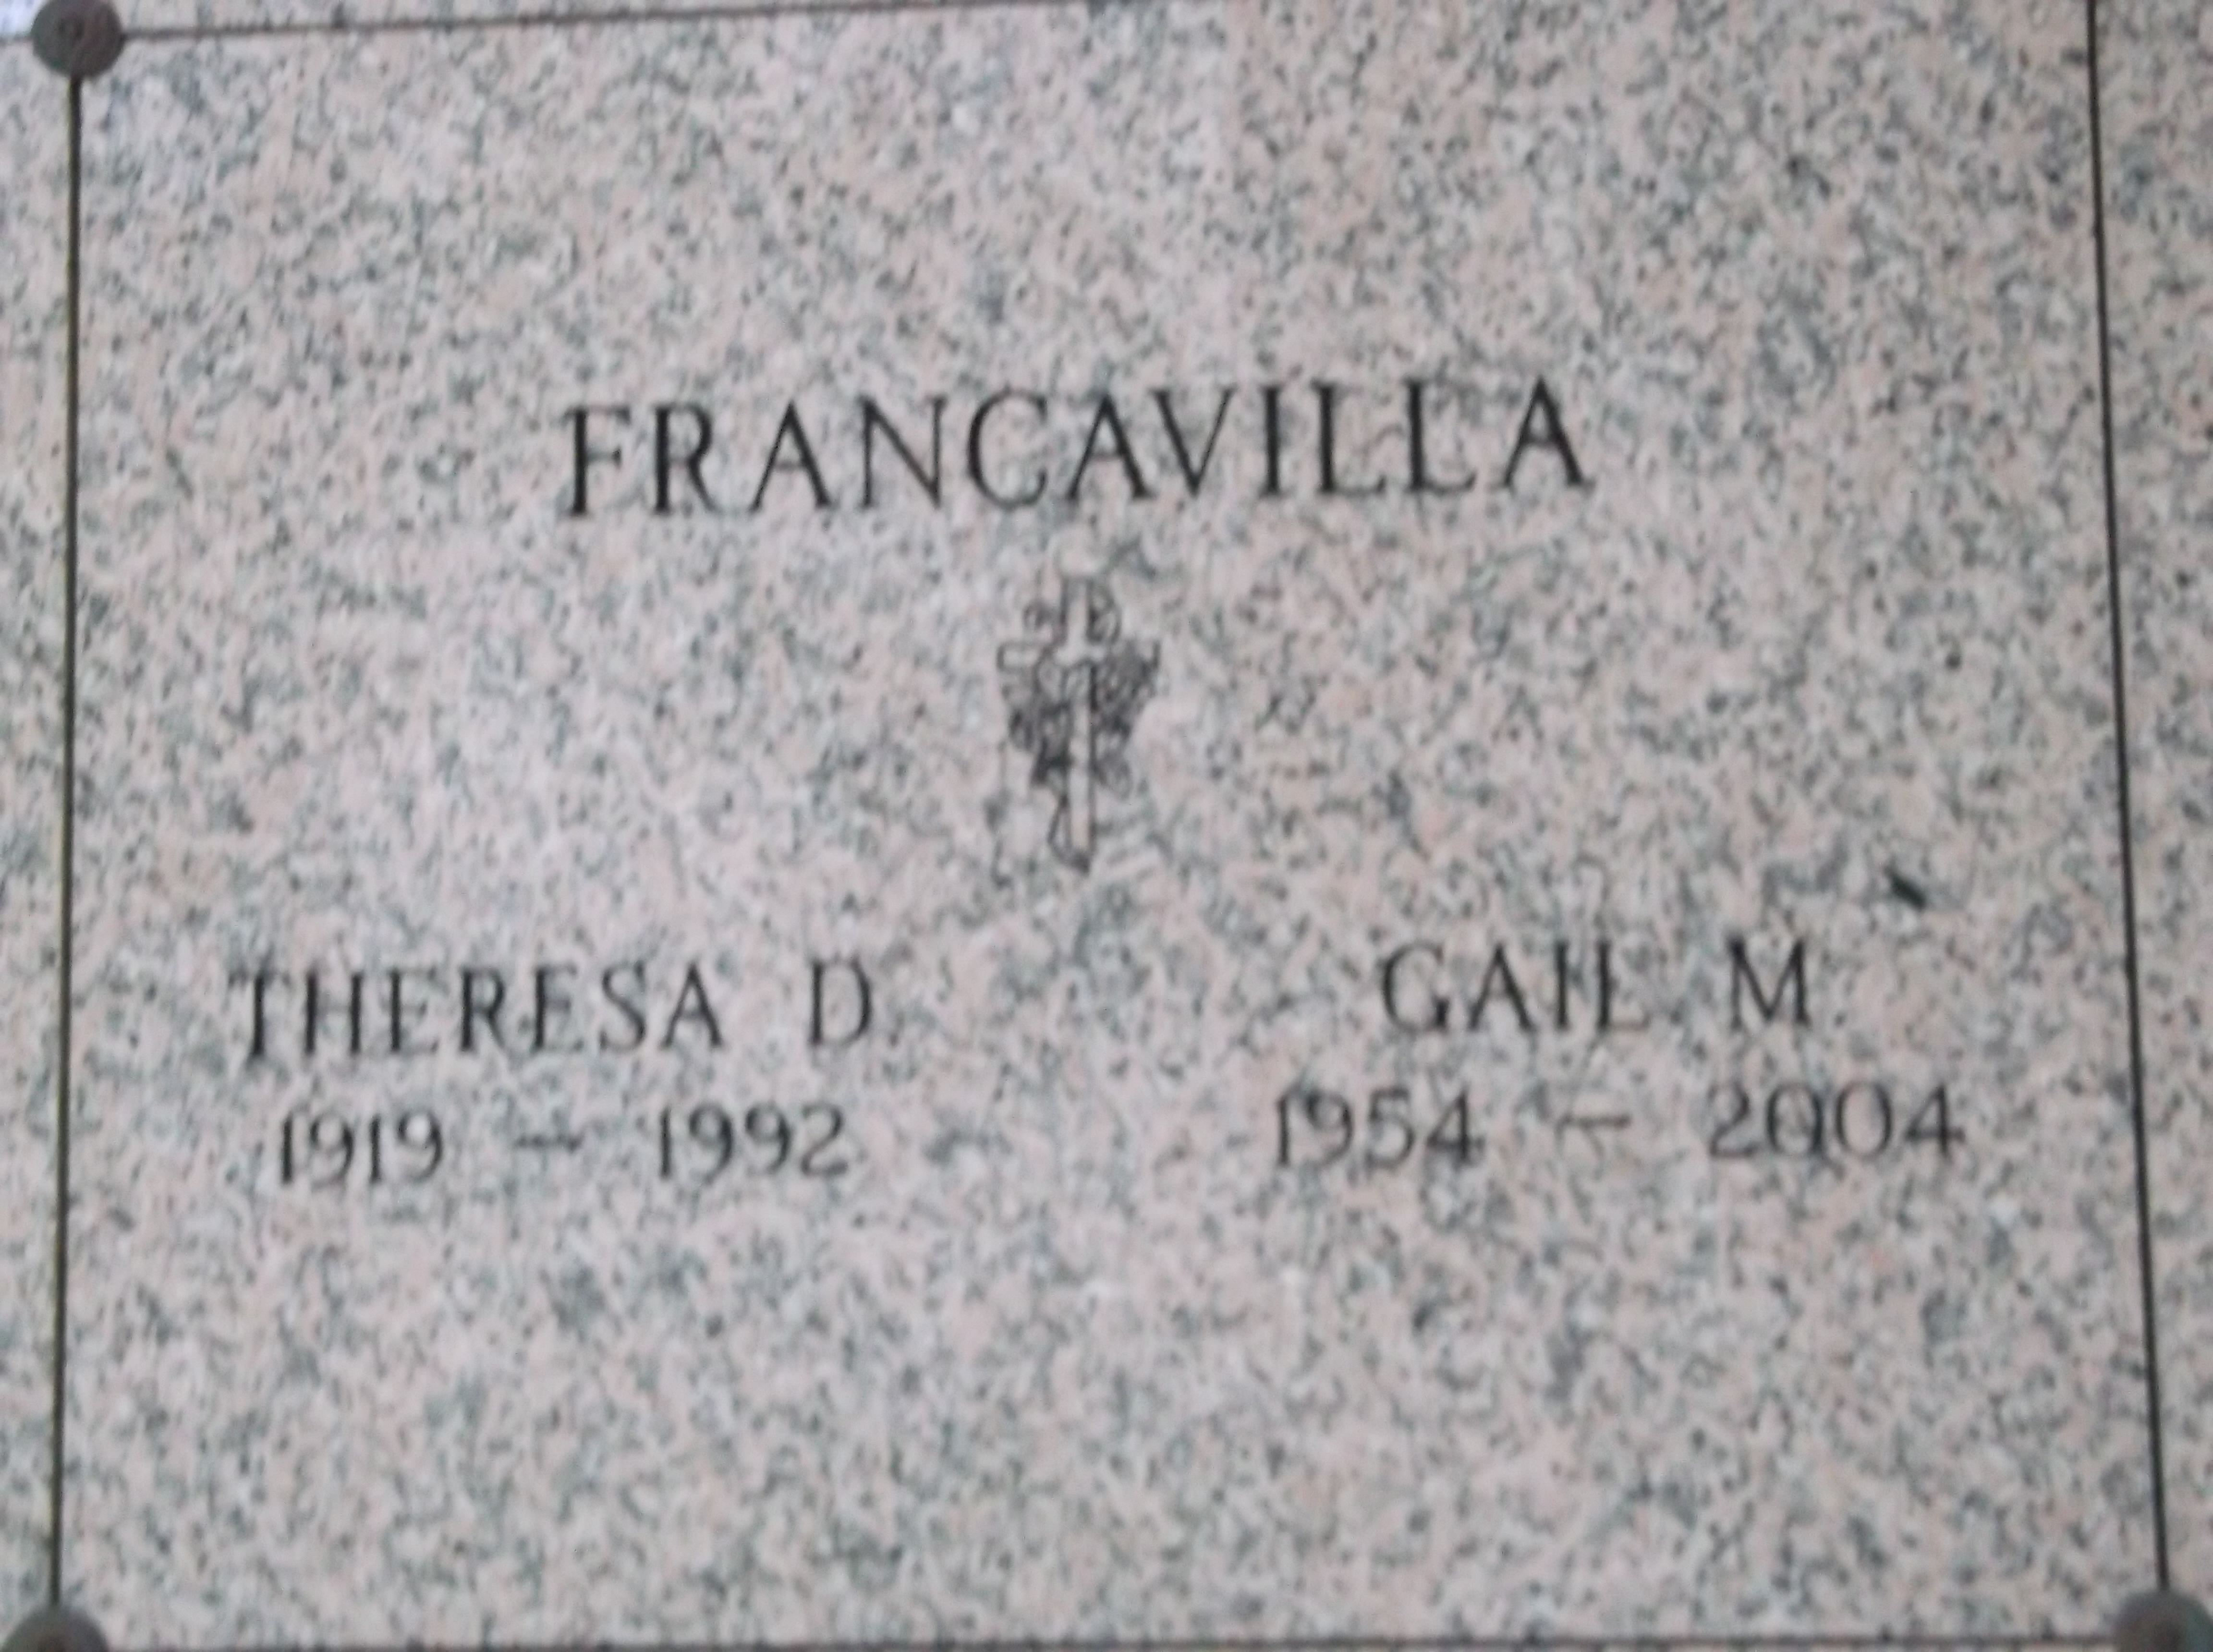 Gail M Francavilla